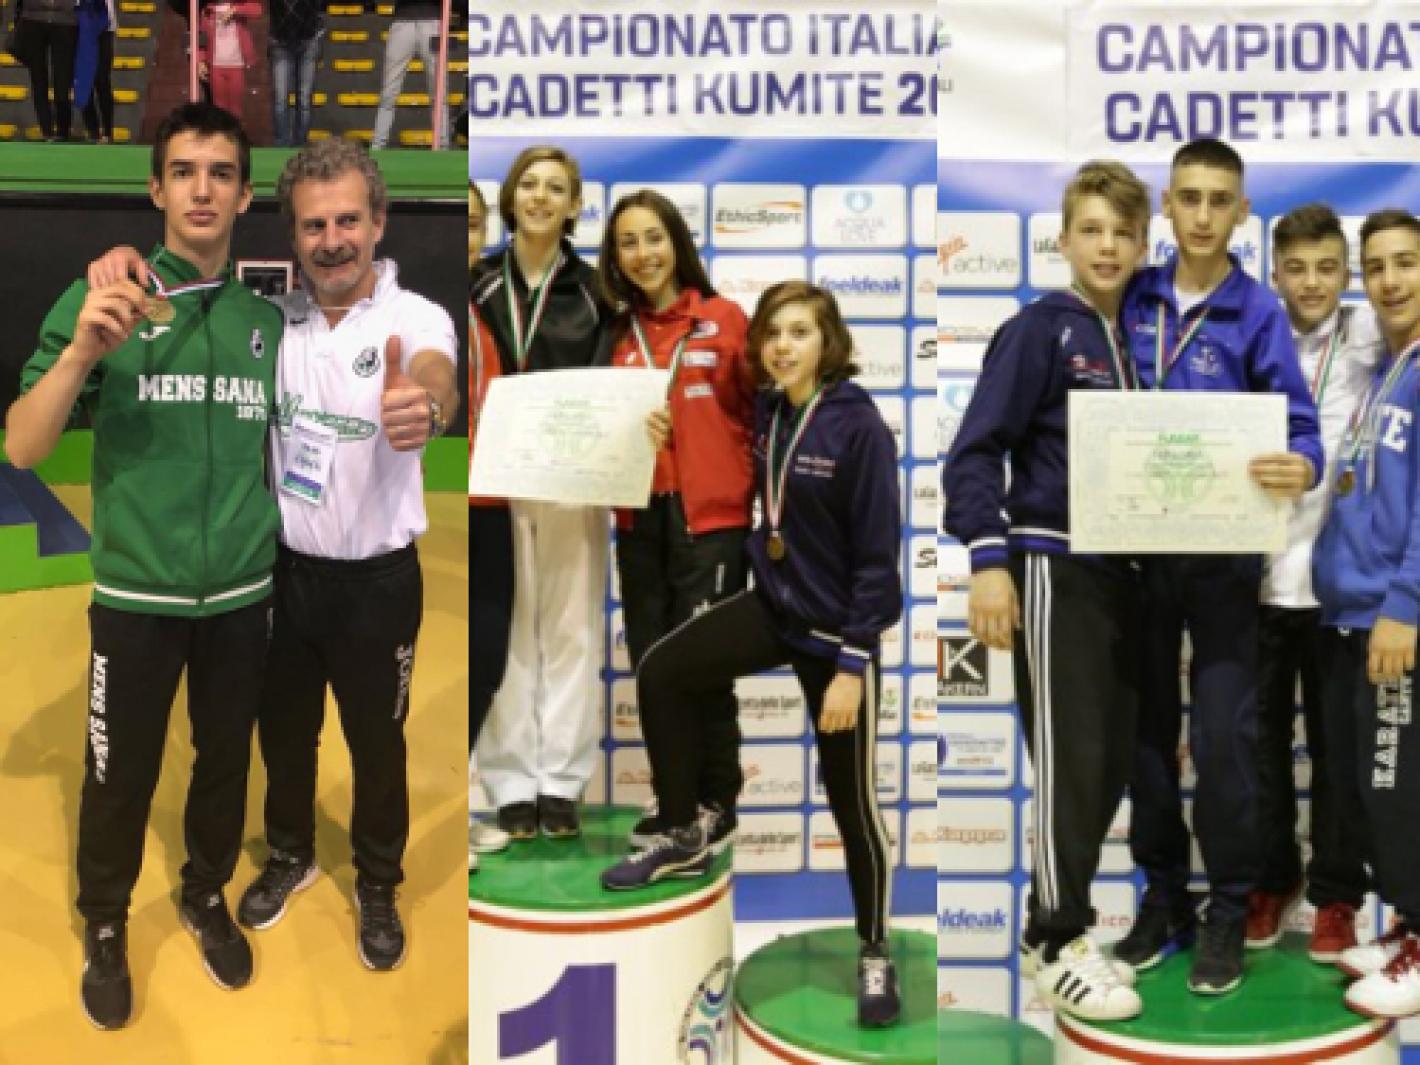 images/toscana/medium/Campionato_Ita_Kumite_Cad_2018_podi_LQ.jpg